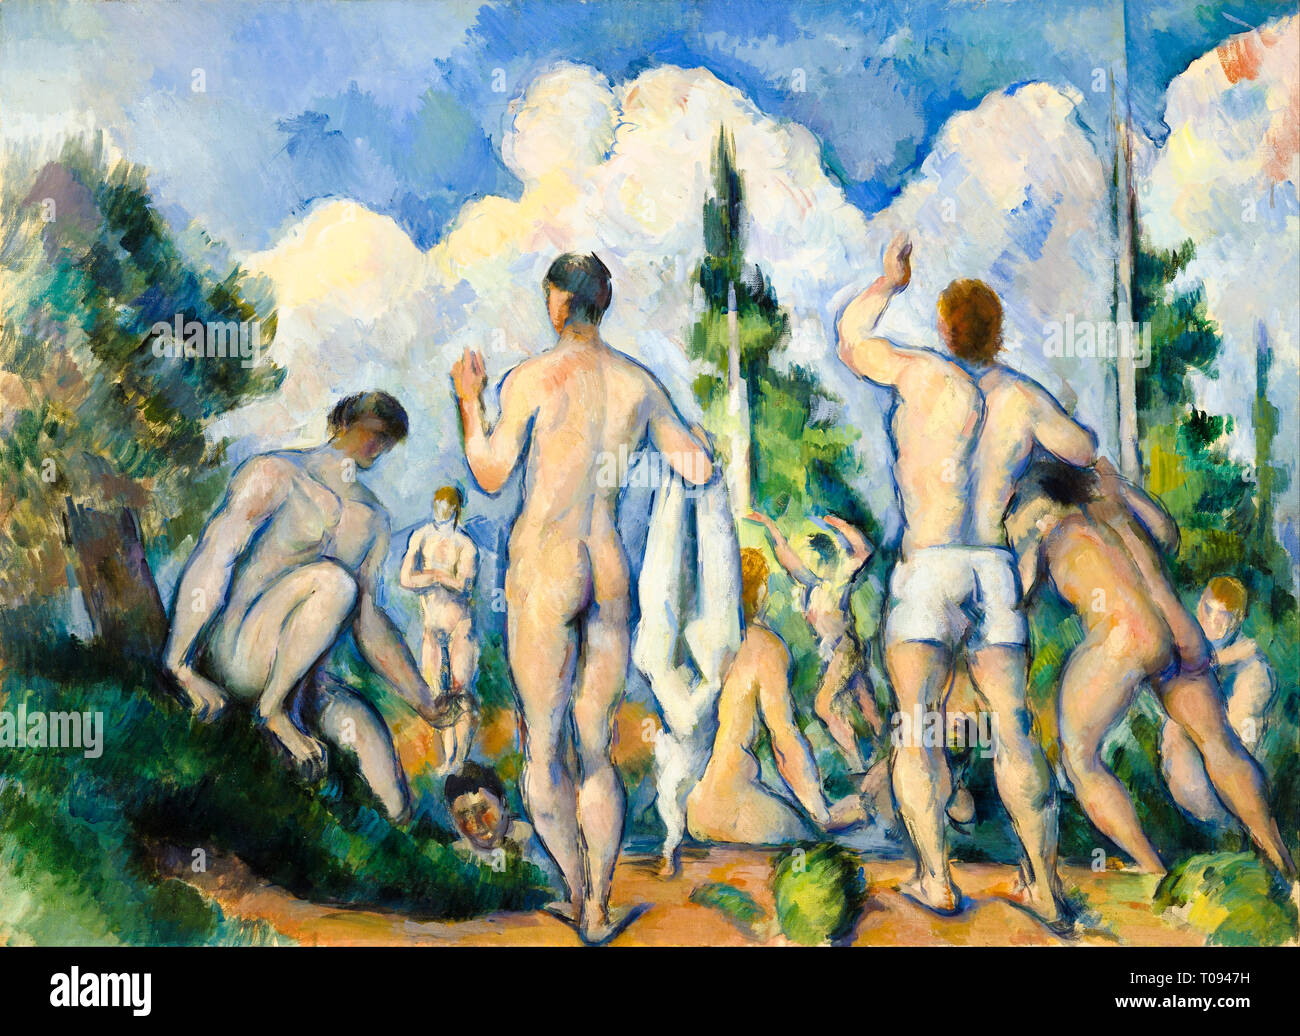 Paul Cézanne, The Bathers, Post-Impressionist painting, circa 1890 Stock Photo